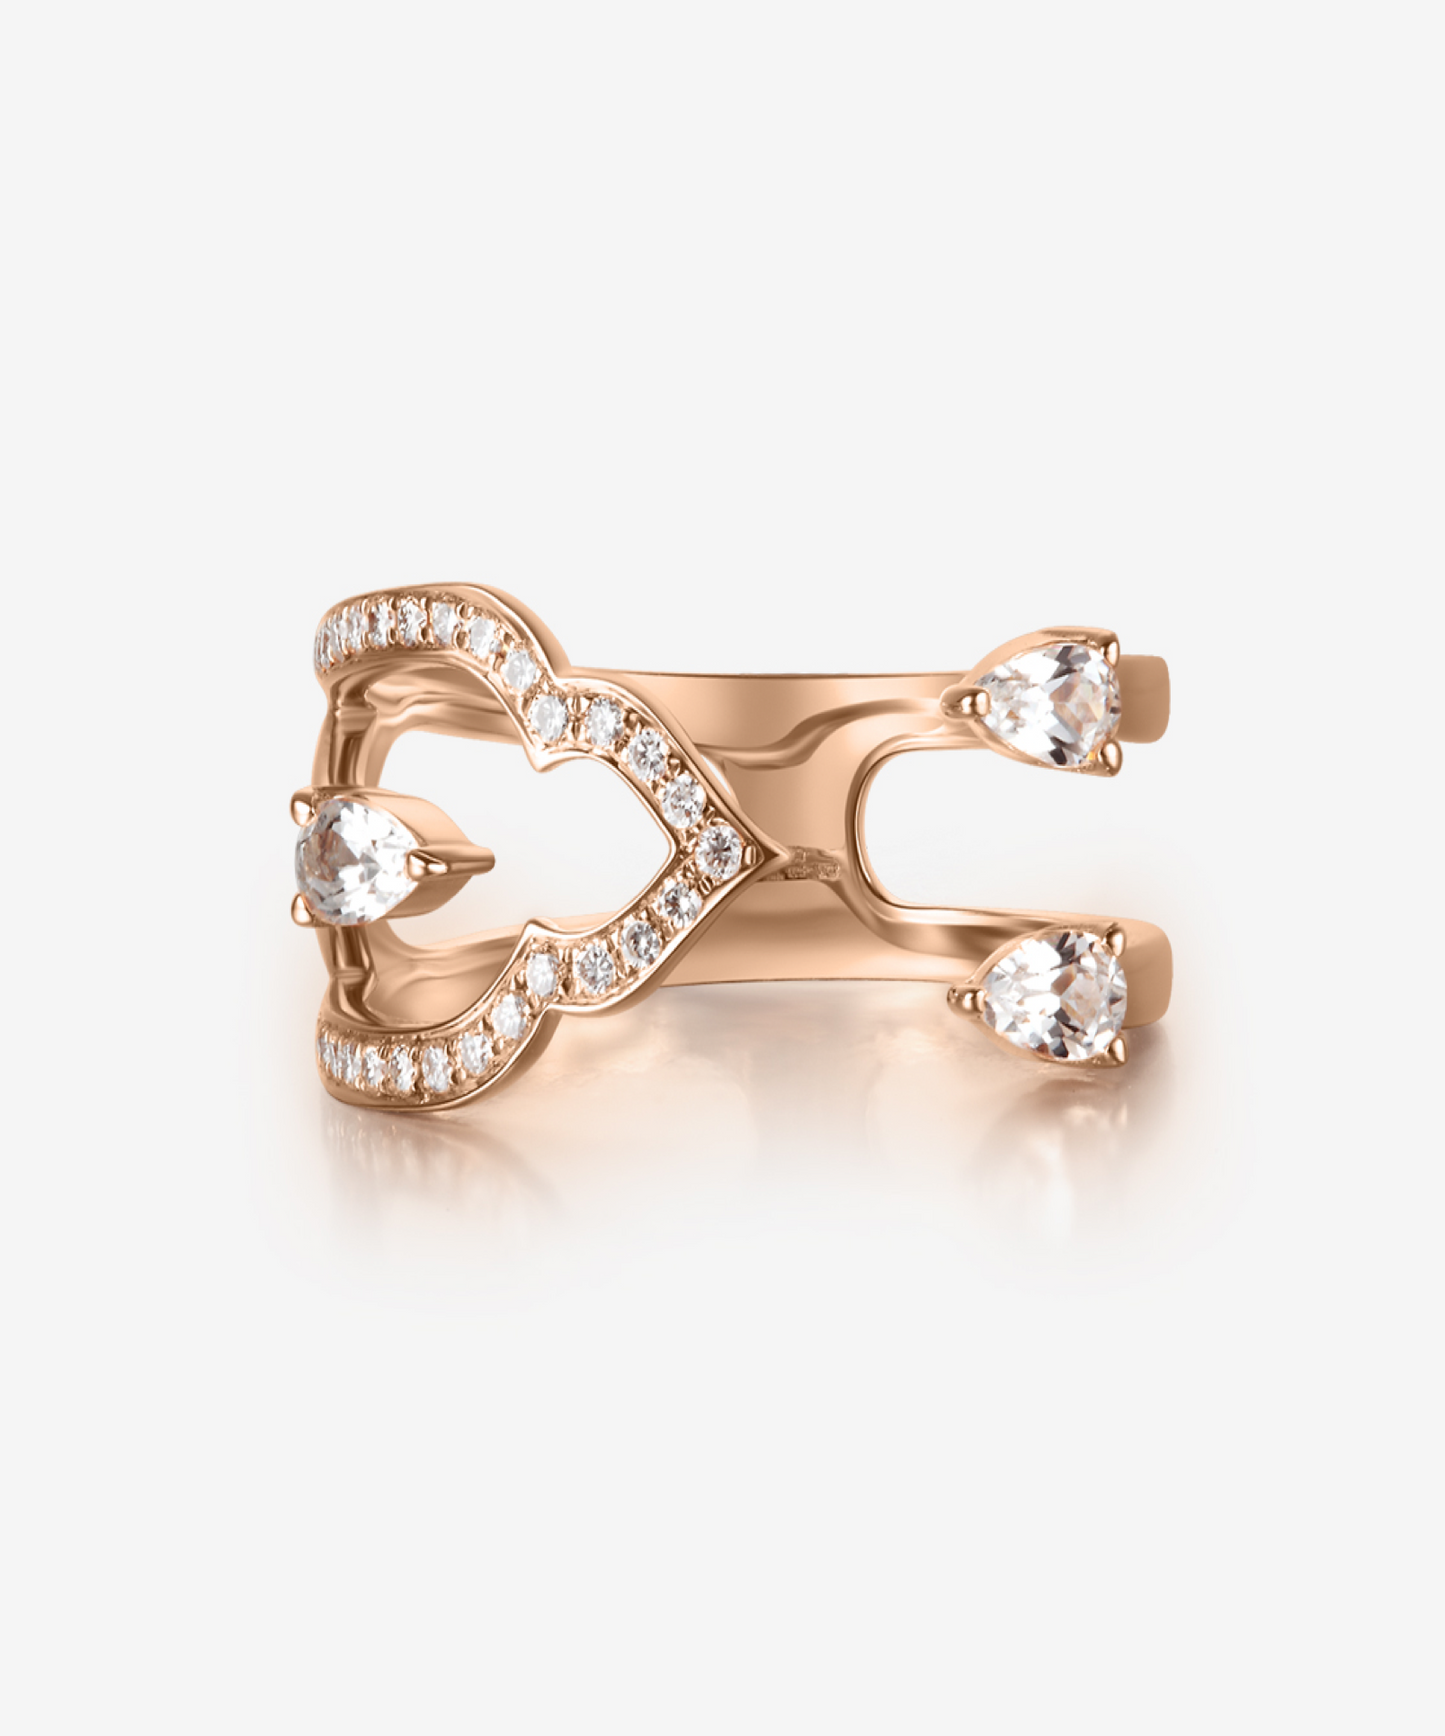 THIALH - ROMAnce • ROYAL GATEWAY - 18K Rose Gold White Sapphire and Diamonds Ring